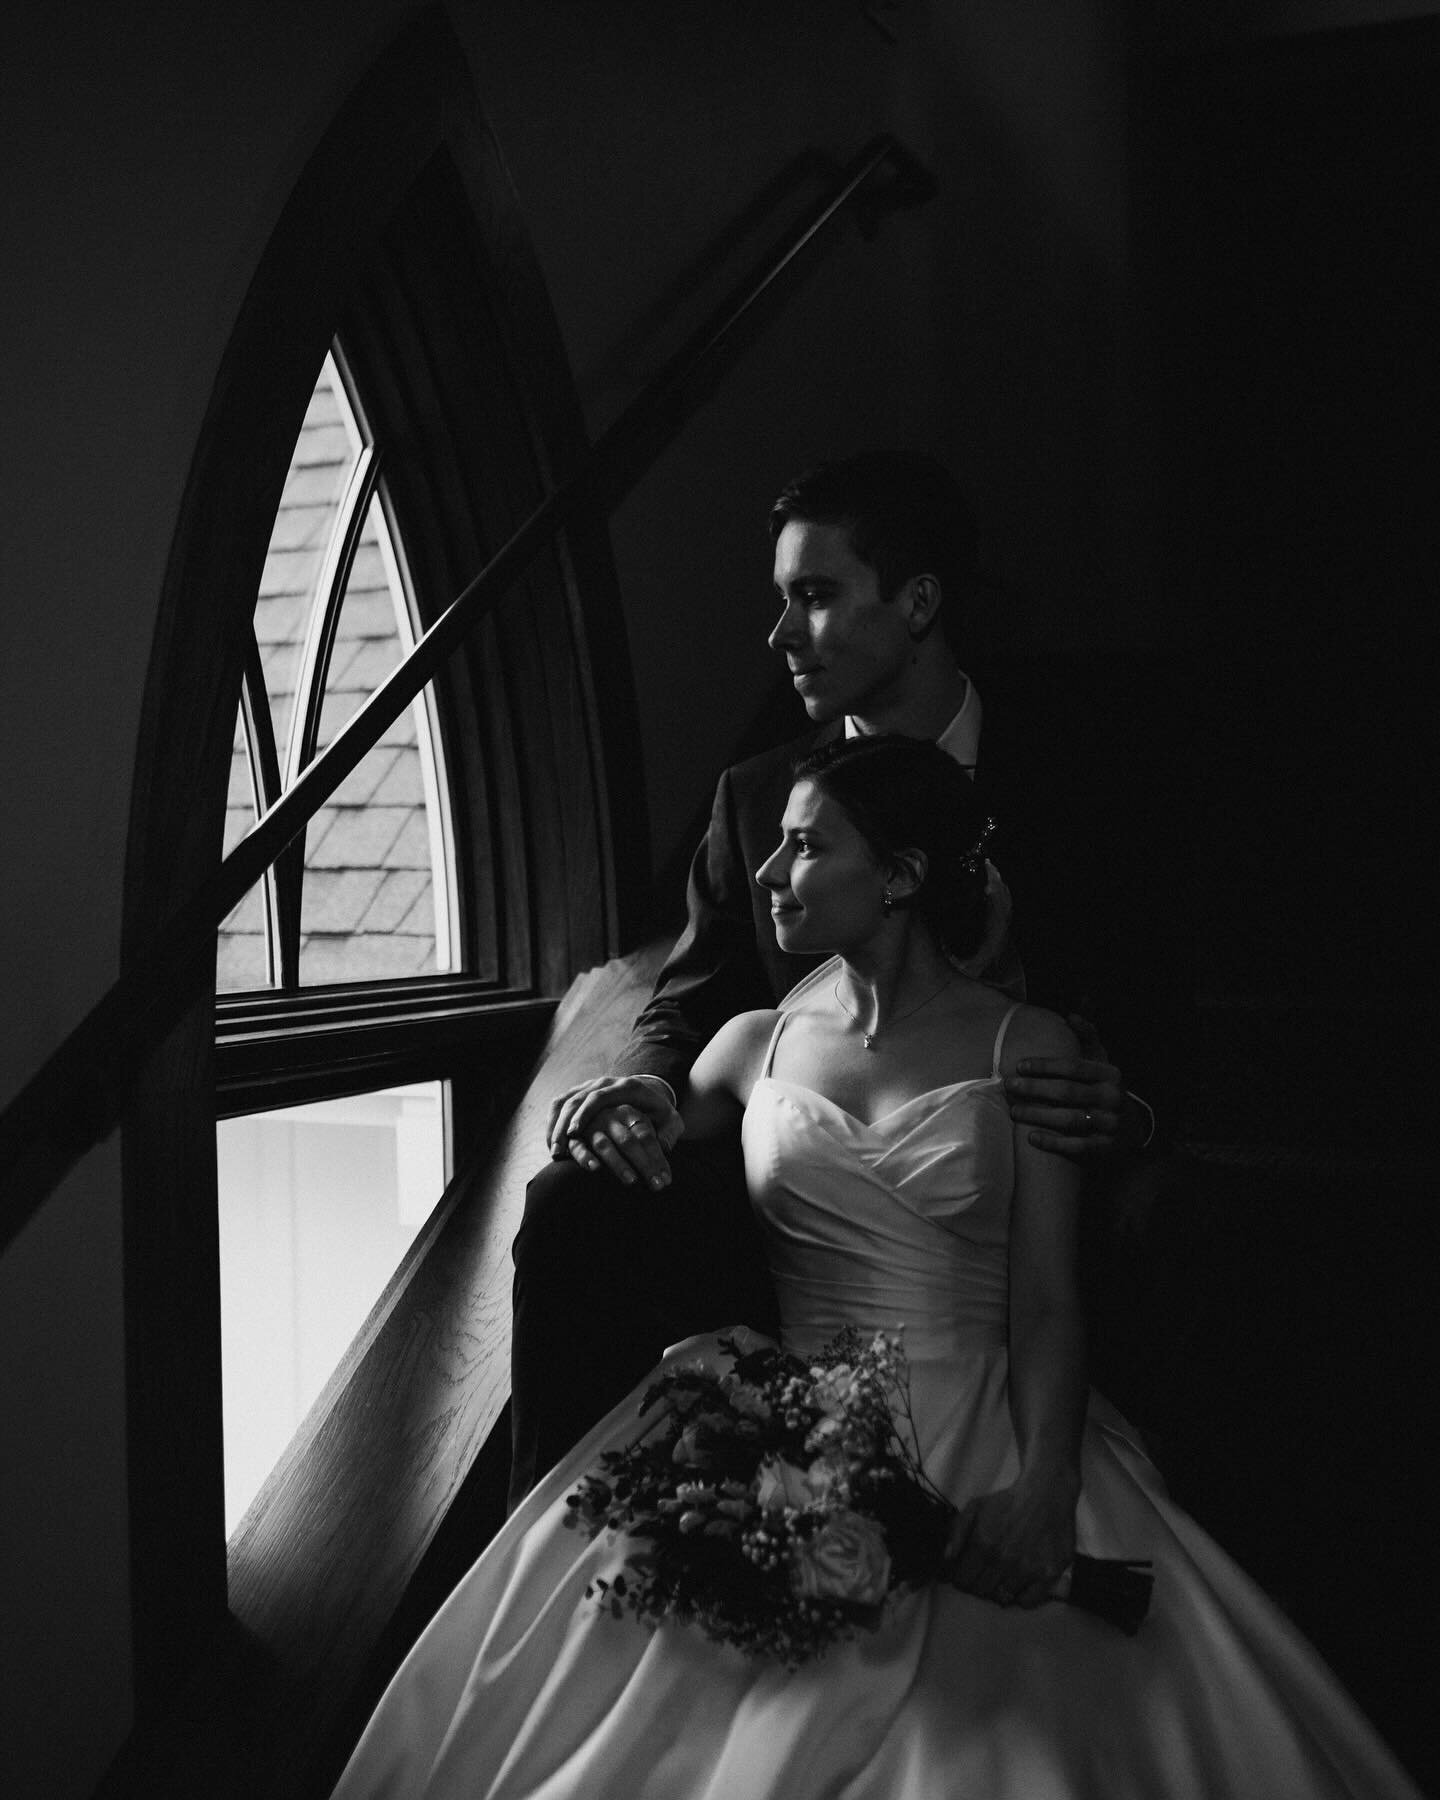 A few simple, quiet moments with Emily + Noah on their beautiful wedding day this past Sunday!

More photos to share soon 🤍

#portlandwedding #abernathycenter #oregonweddingphotographer